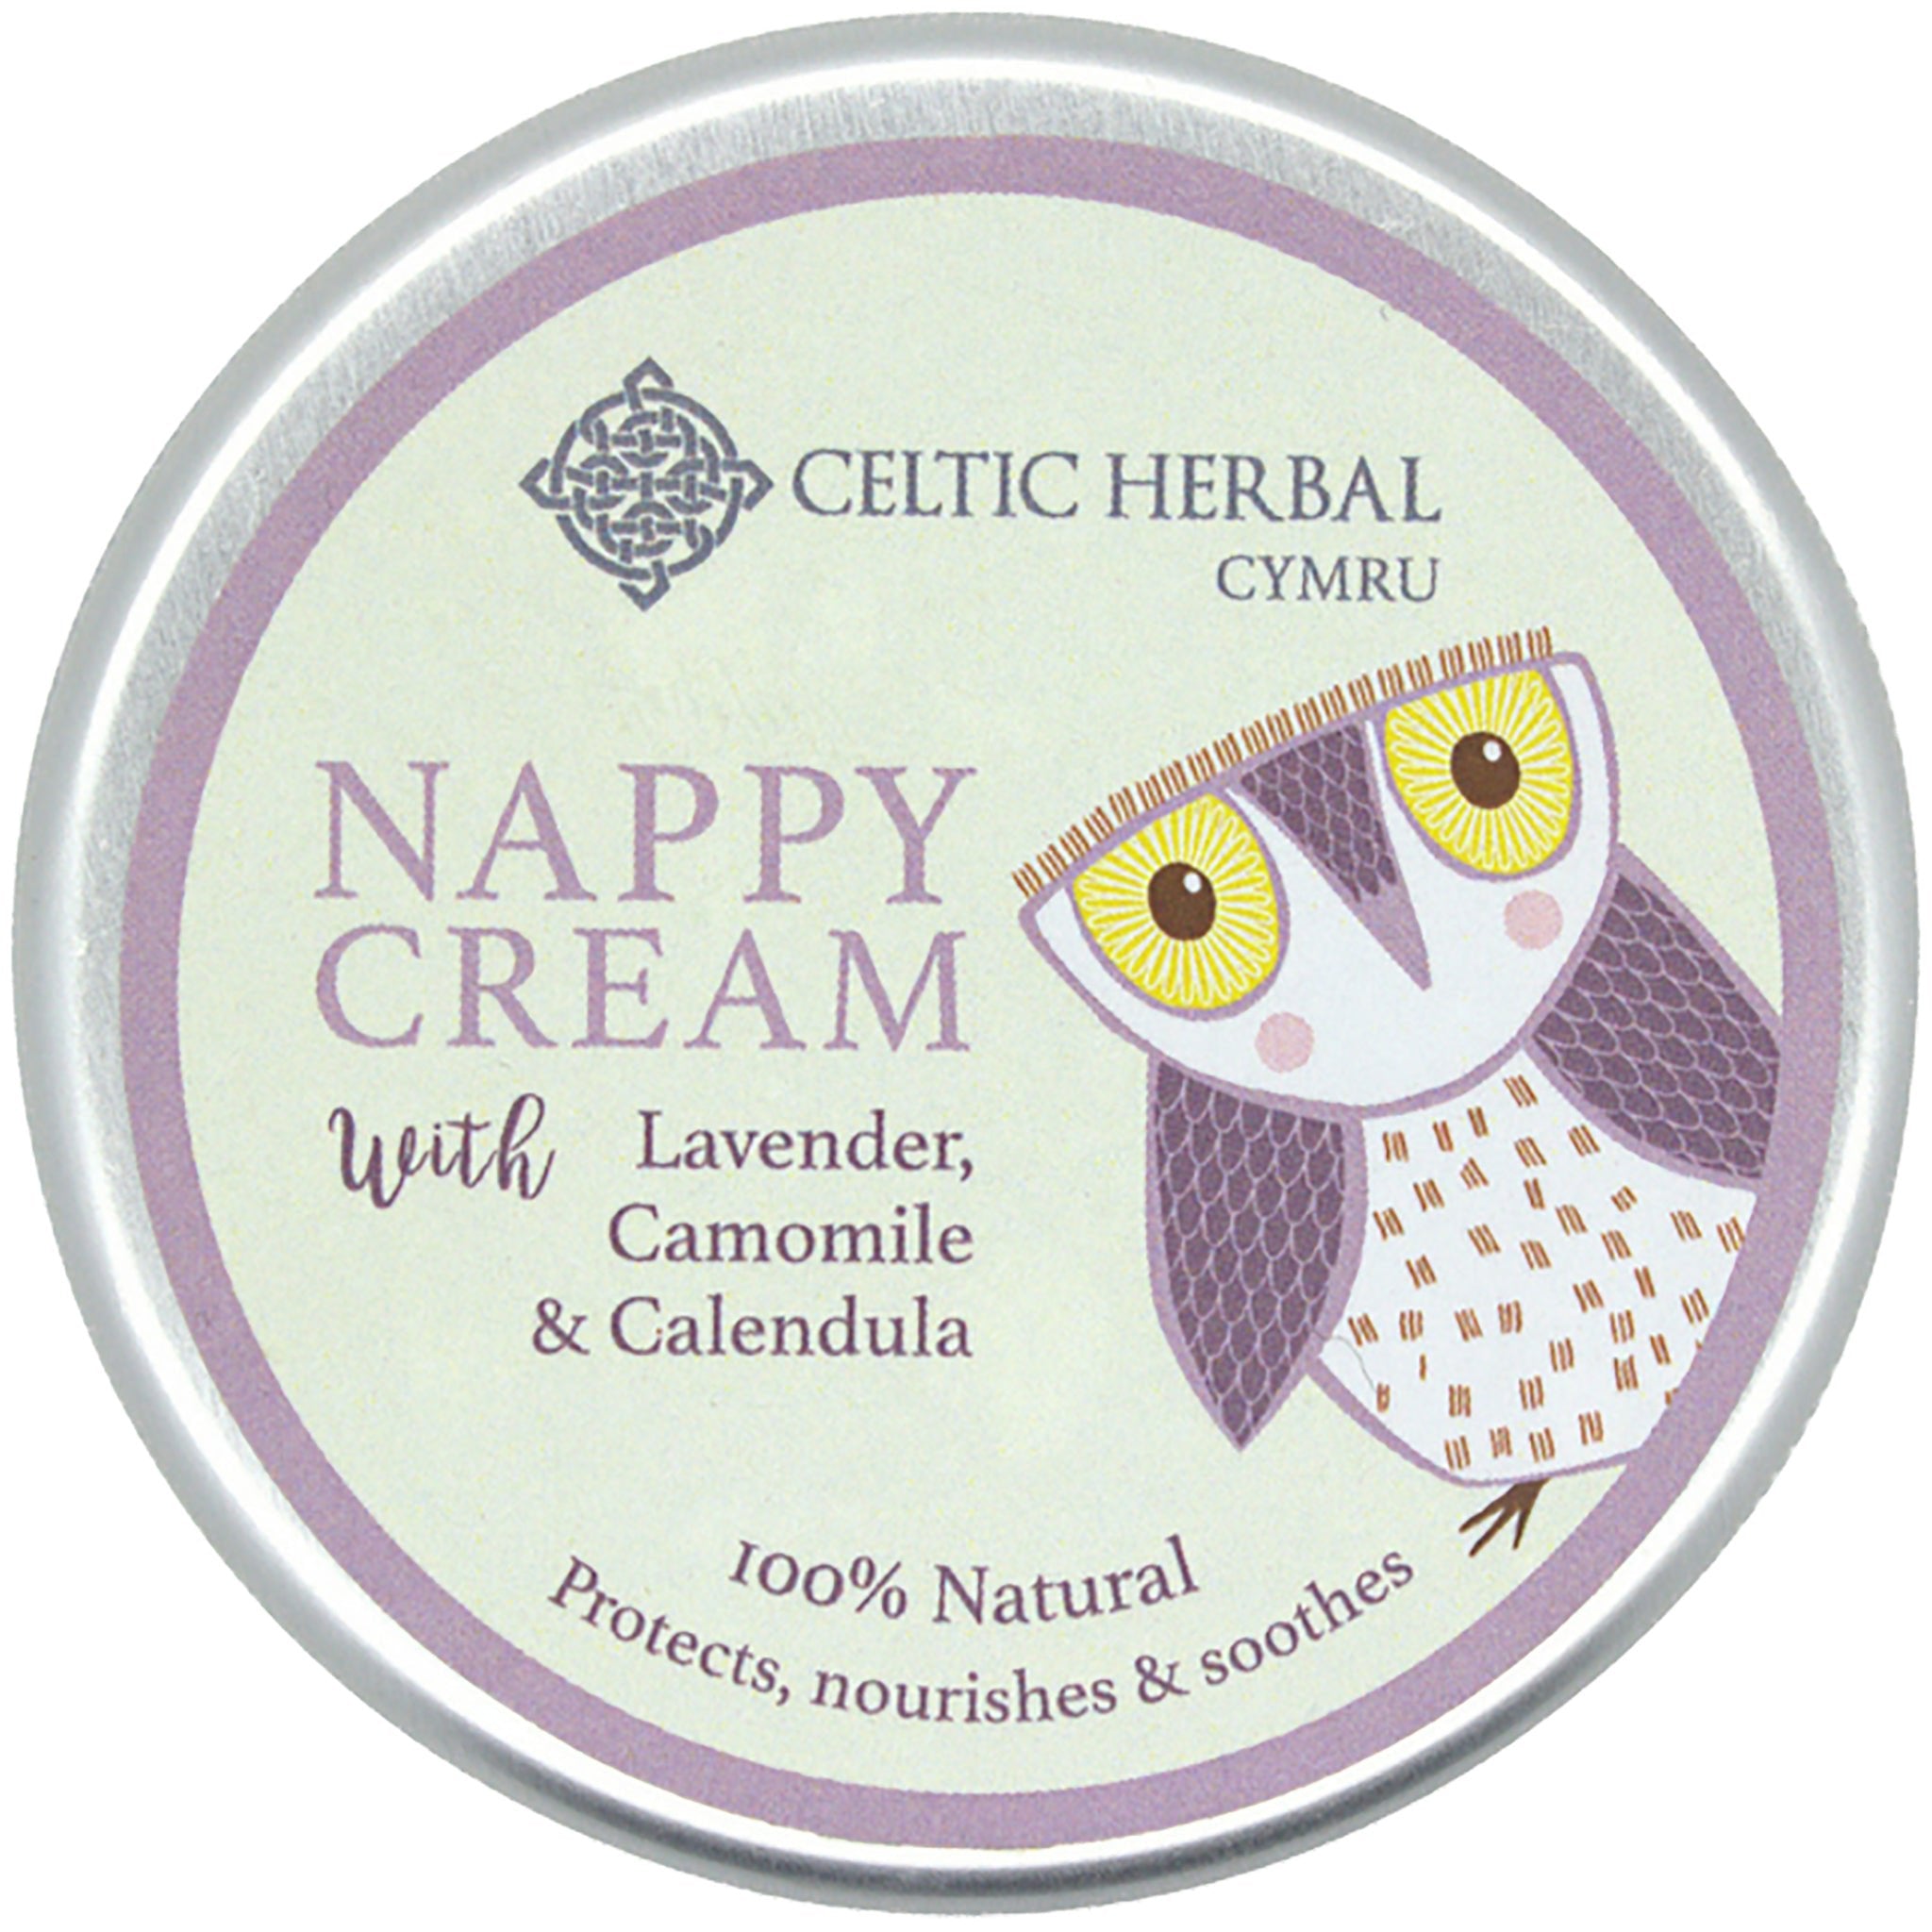 Nappy Cream with Camomile and Calendula - mypure.co.uk